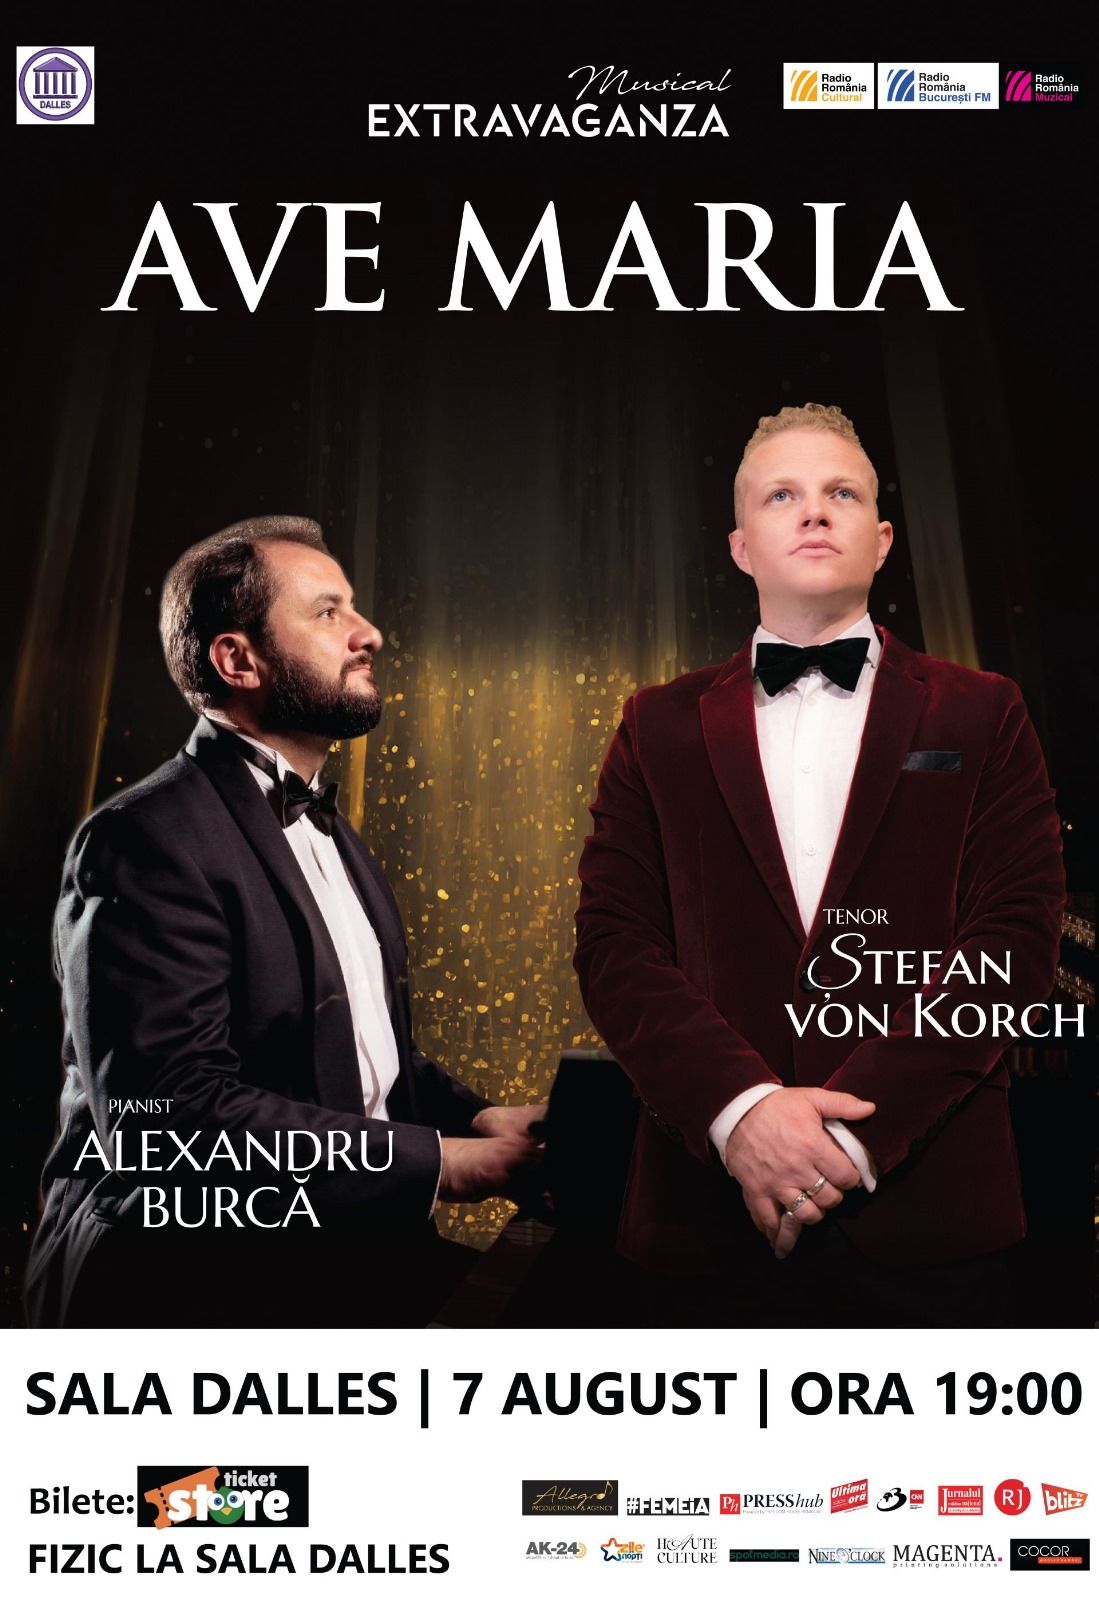 AVE MARIA - Sala Dalles. \u0218tefan von Korch tenor \u0219i Alexandru Burc\u0103 pianist. 